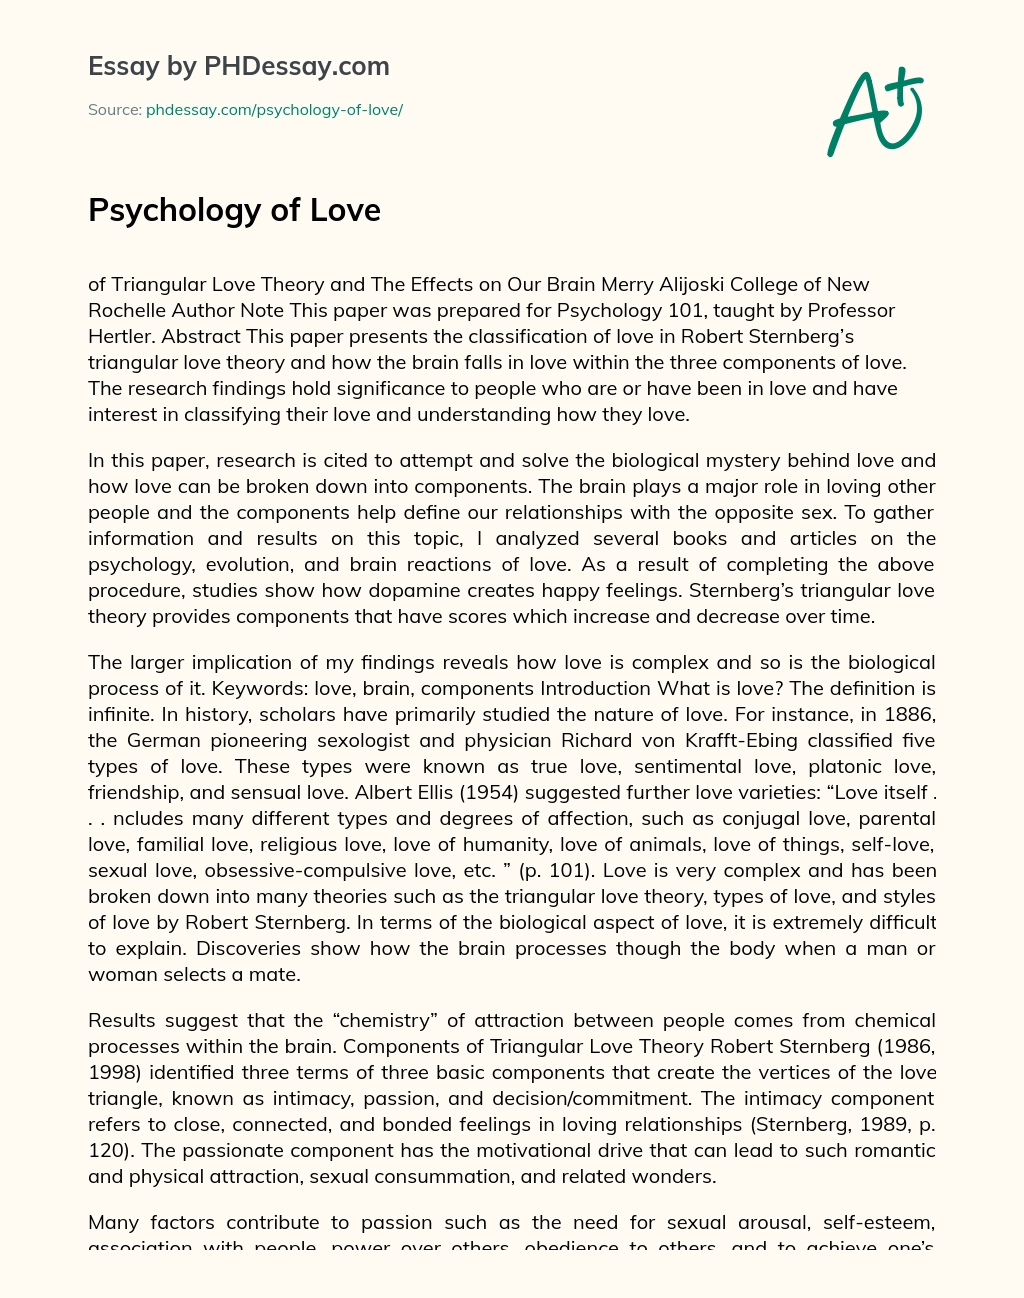 Psychology of Love essay